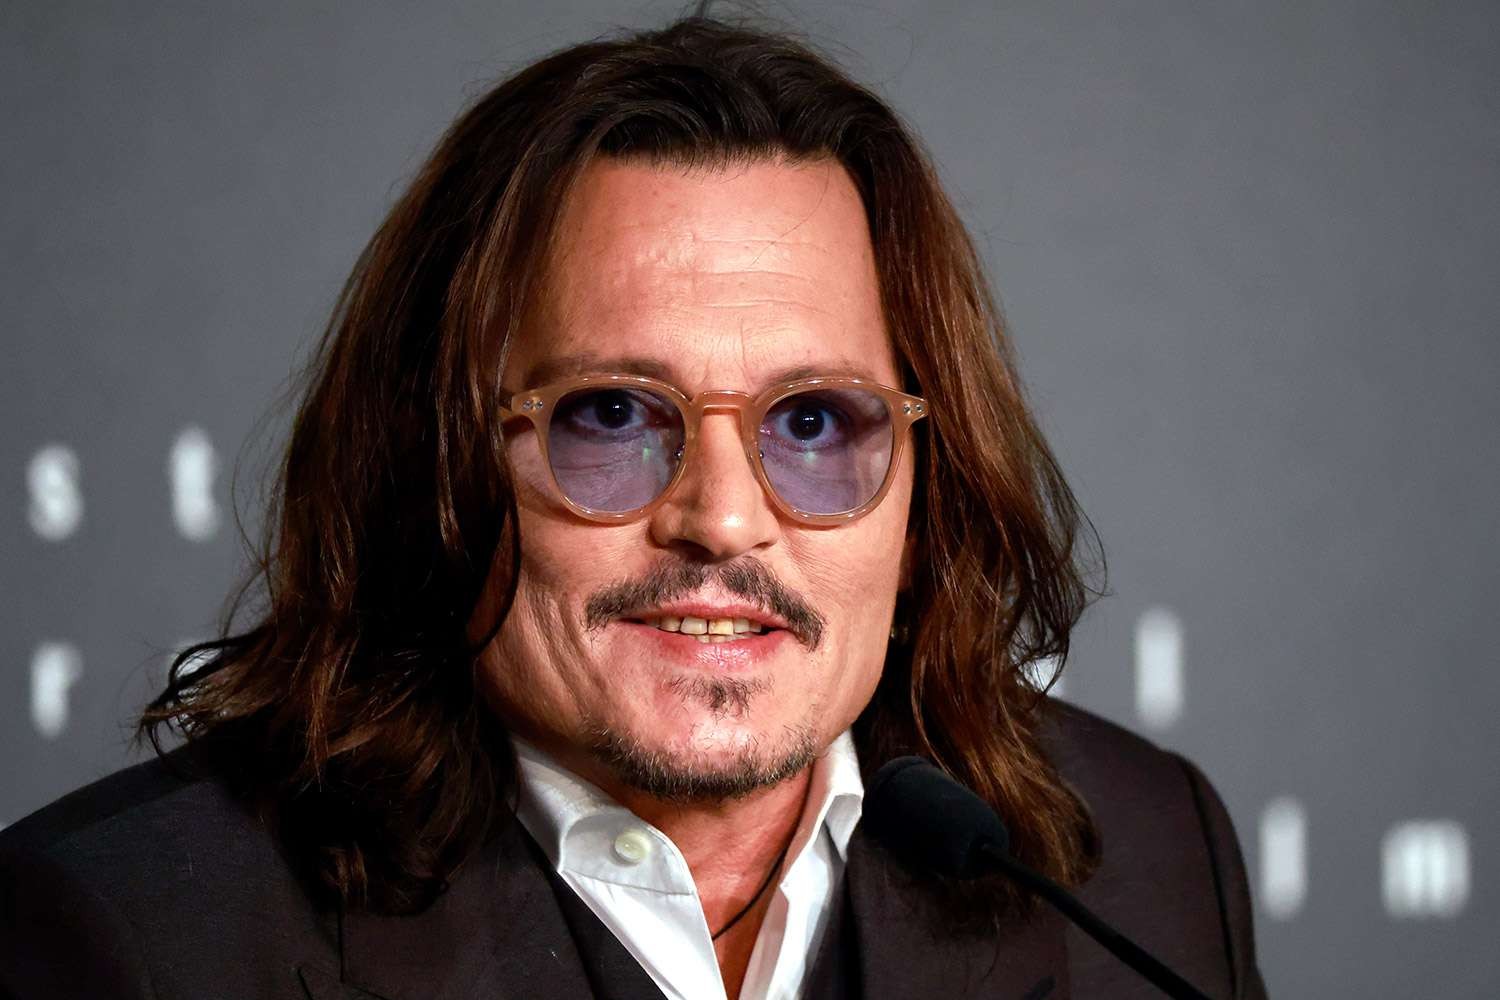 Johnny Depp at an event